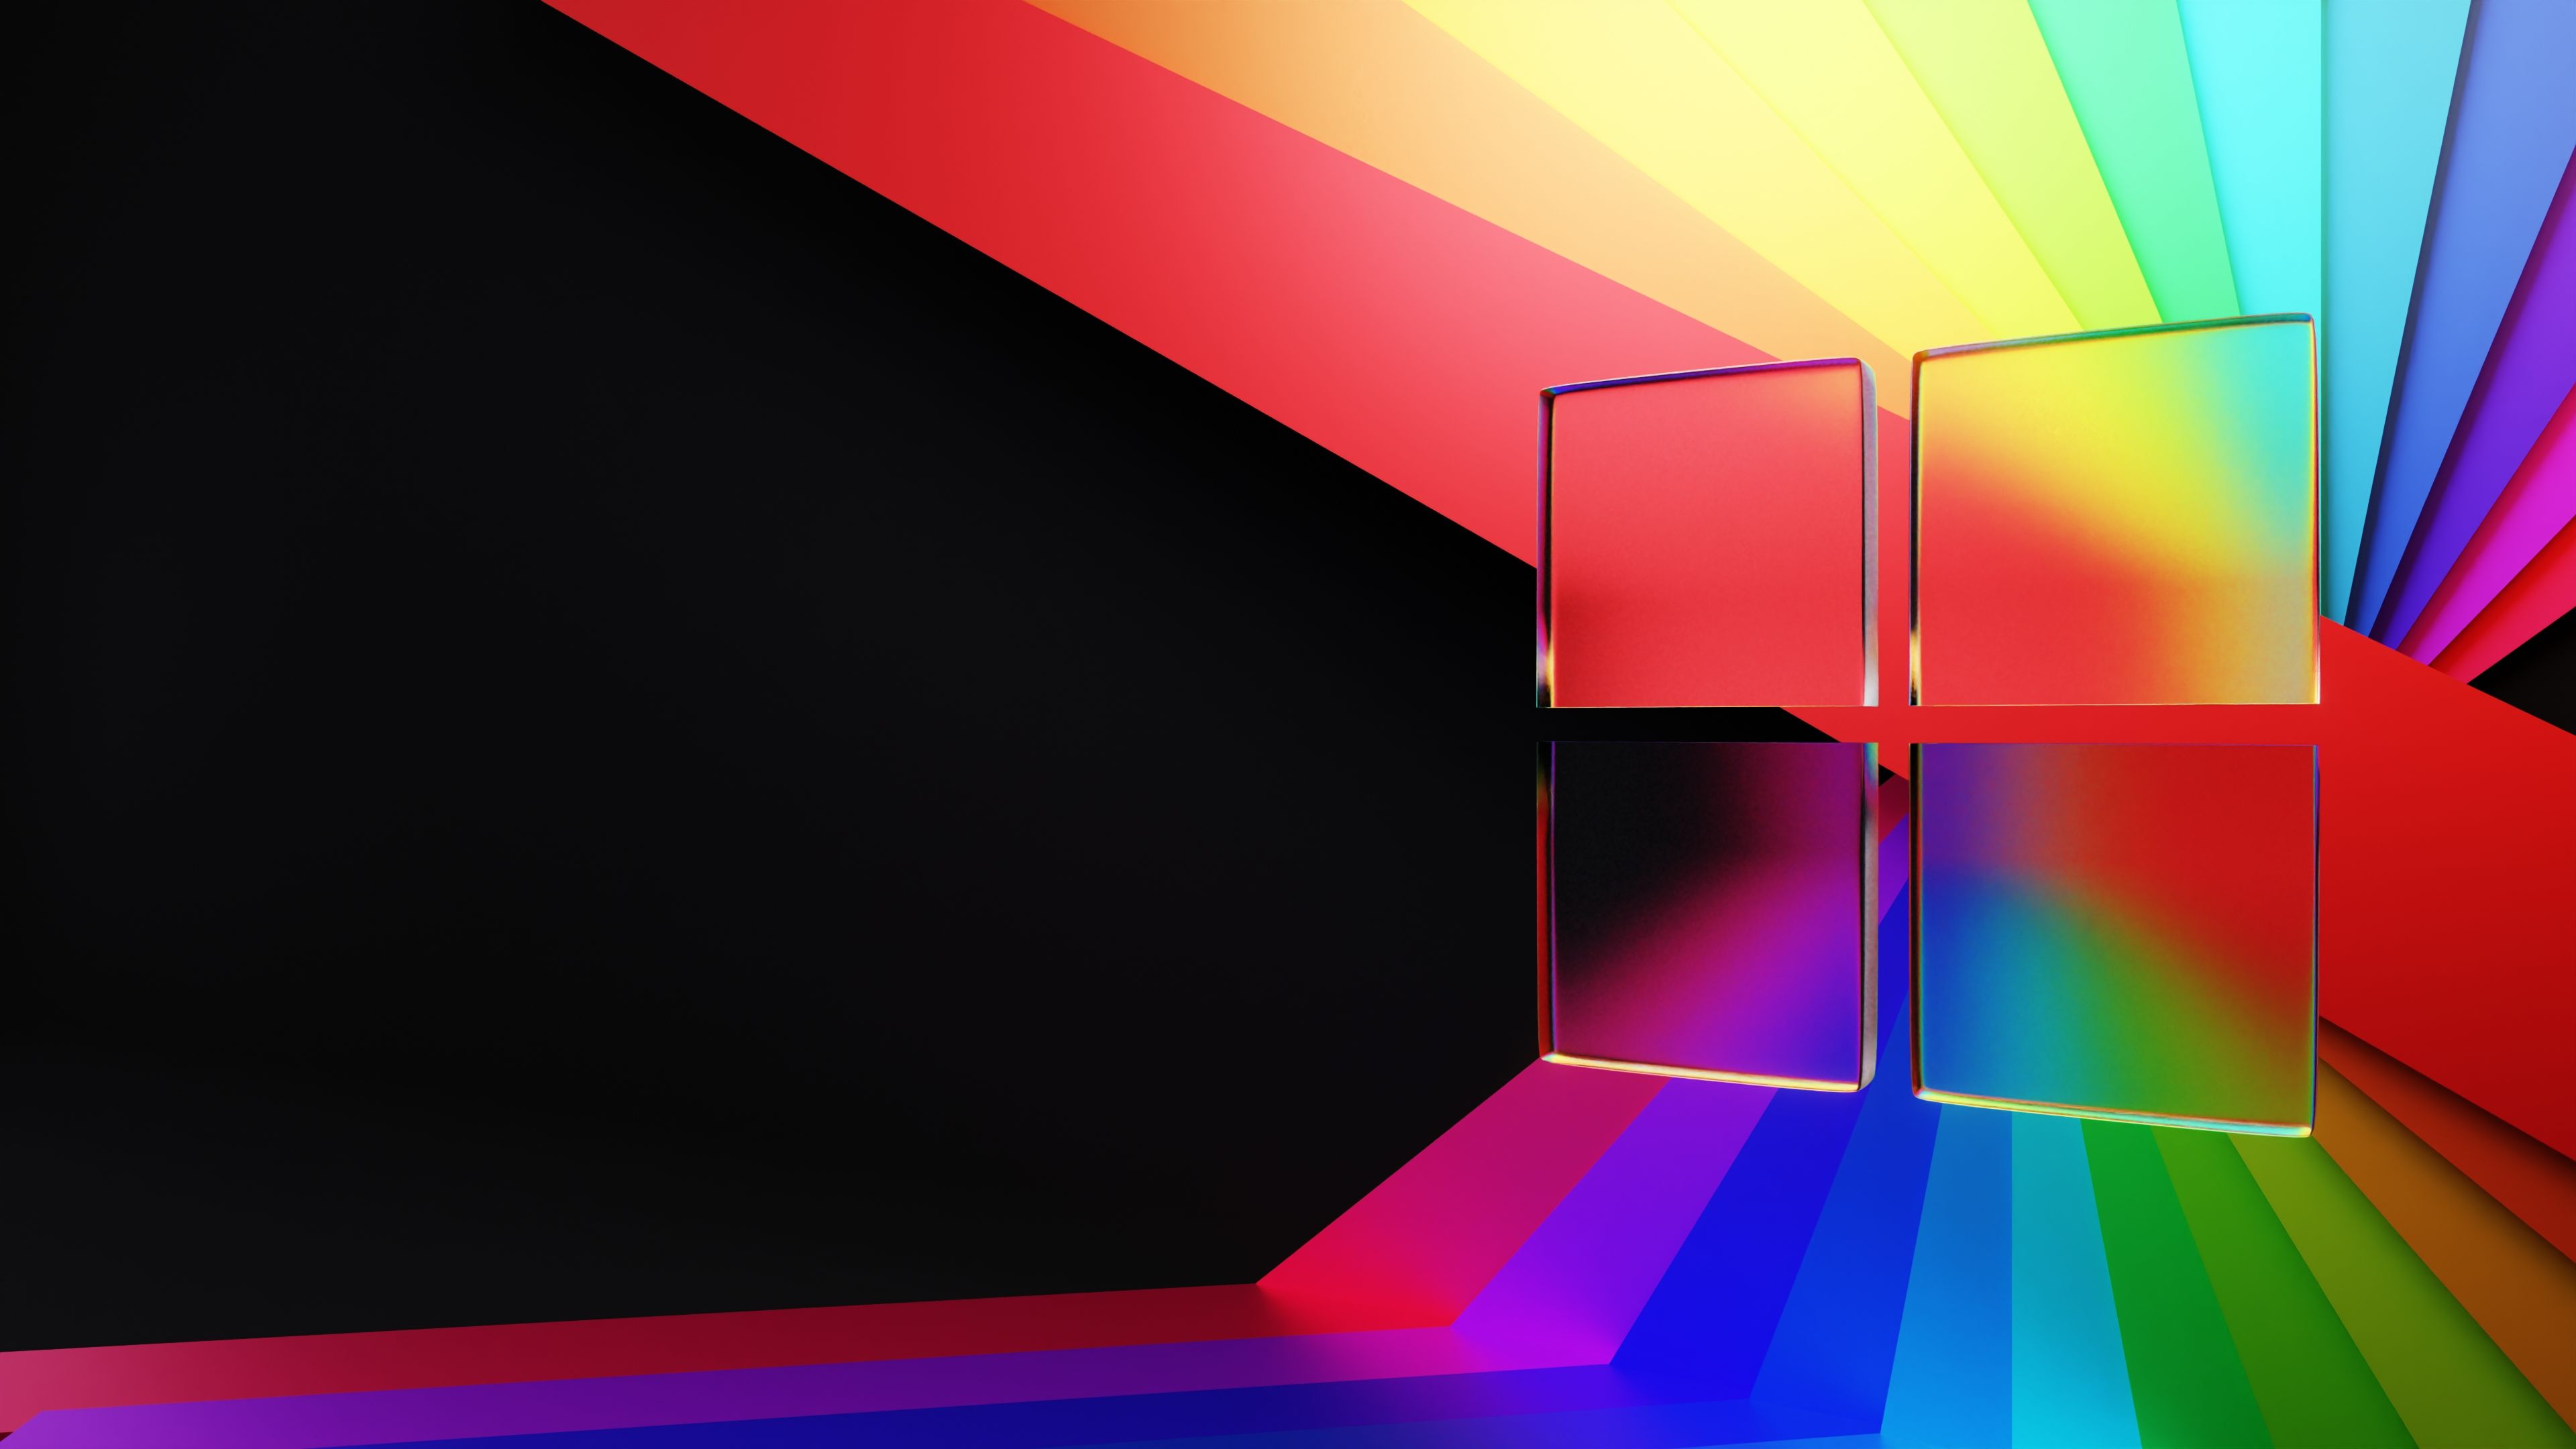  Windows 11 Hintergrundbild 3840x2160. Windows 11 Wallpaper 4K, Glass, Colorful abstract, Ribbons